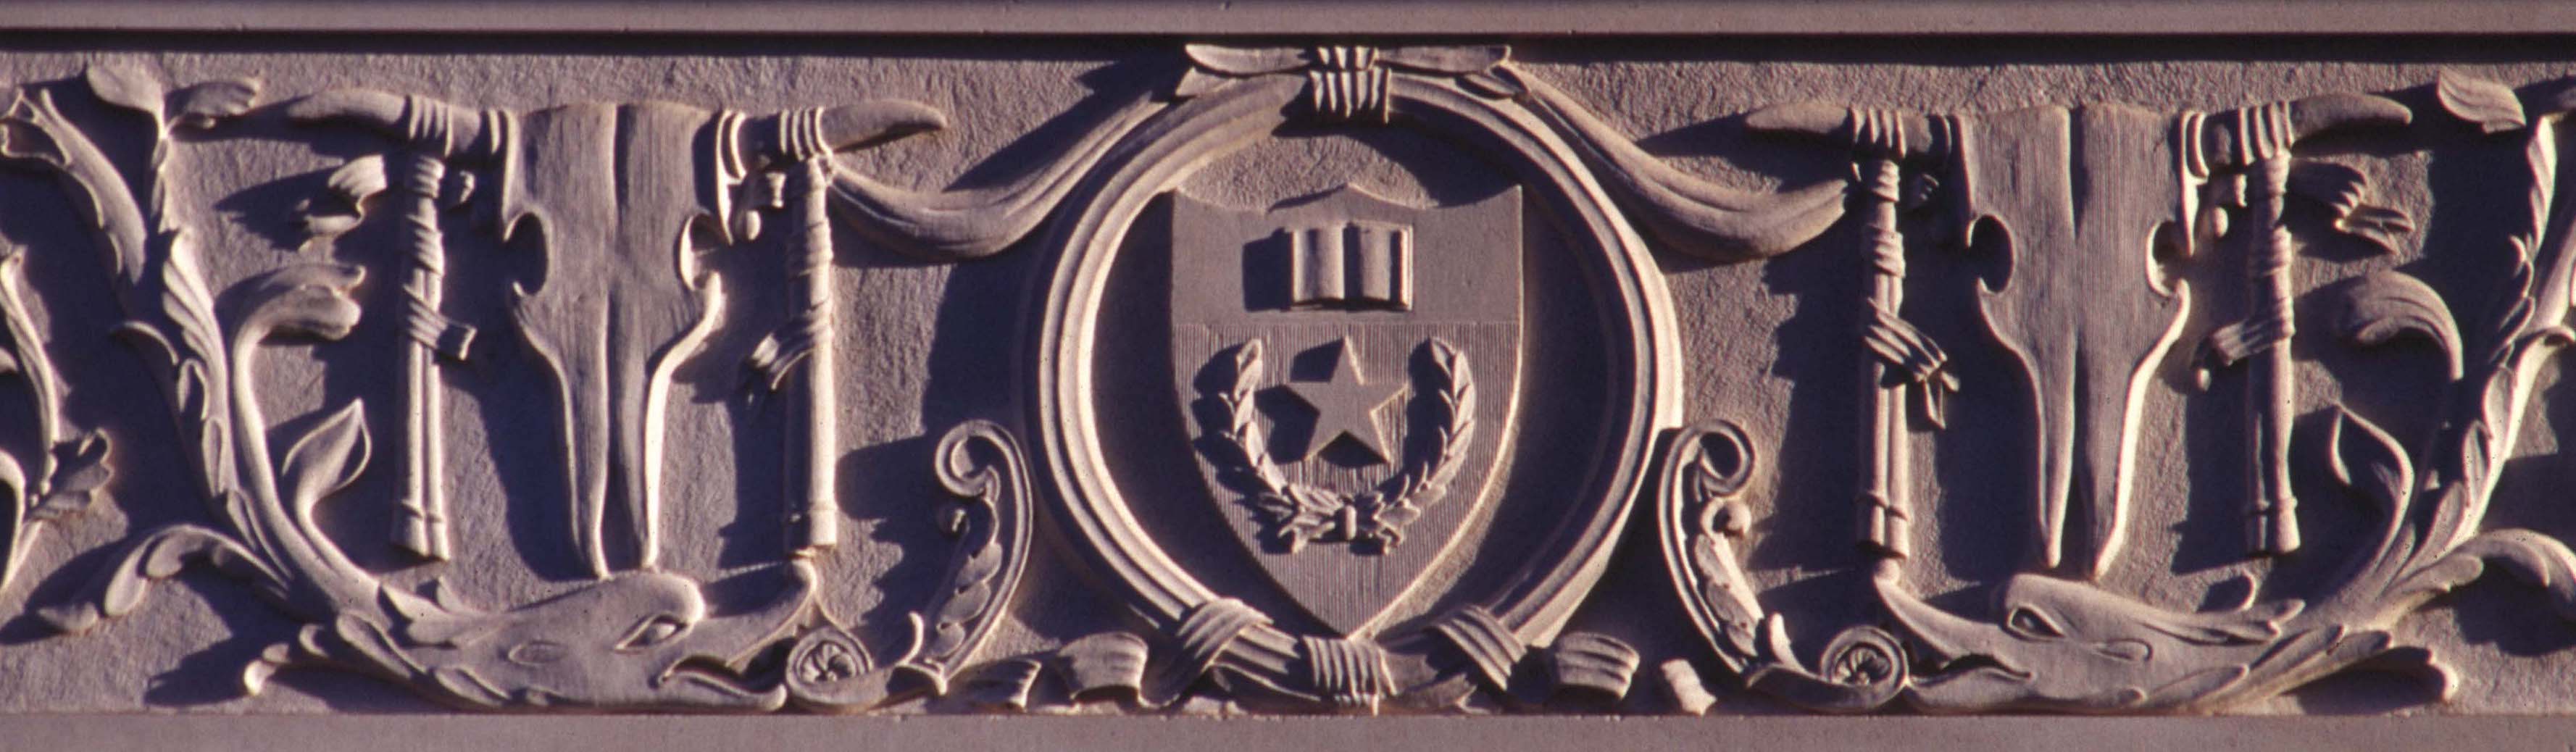 architectural-detail-ut-seal